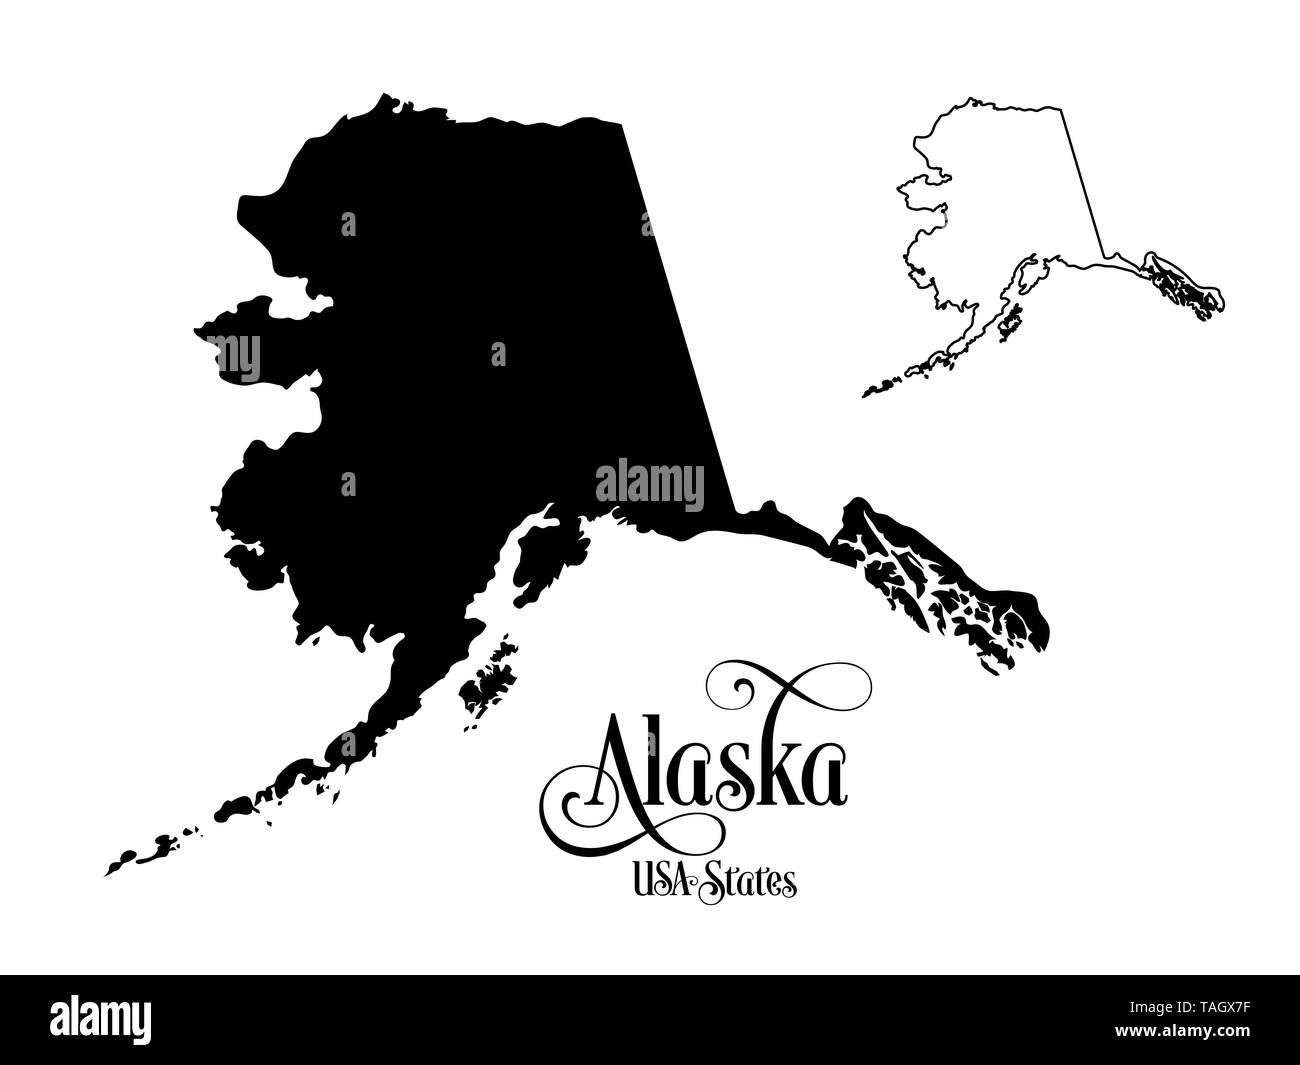 Map of The United States of America (USA) State of Alaska - Illustration on White Background. Stock Photo